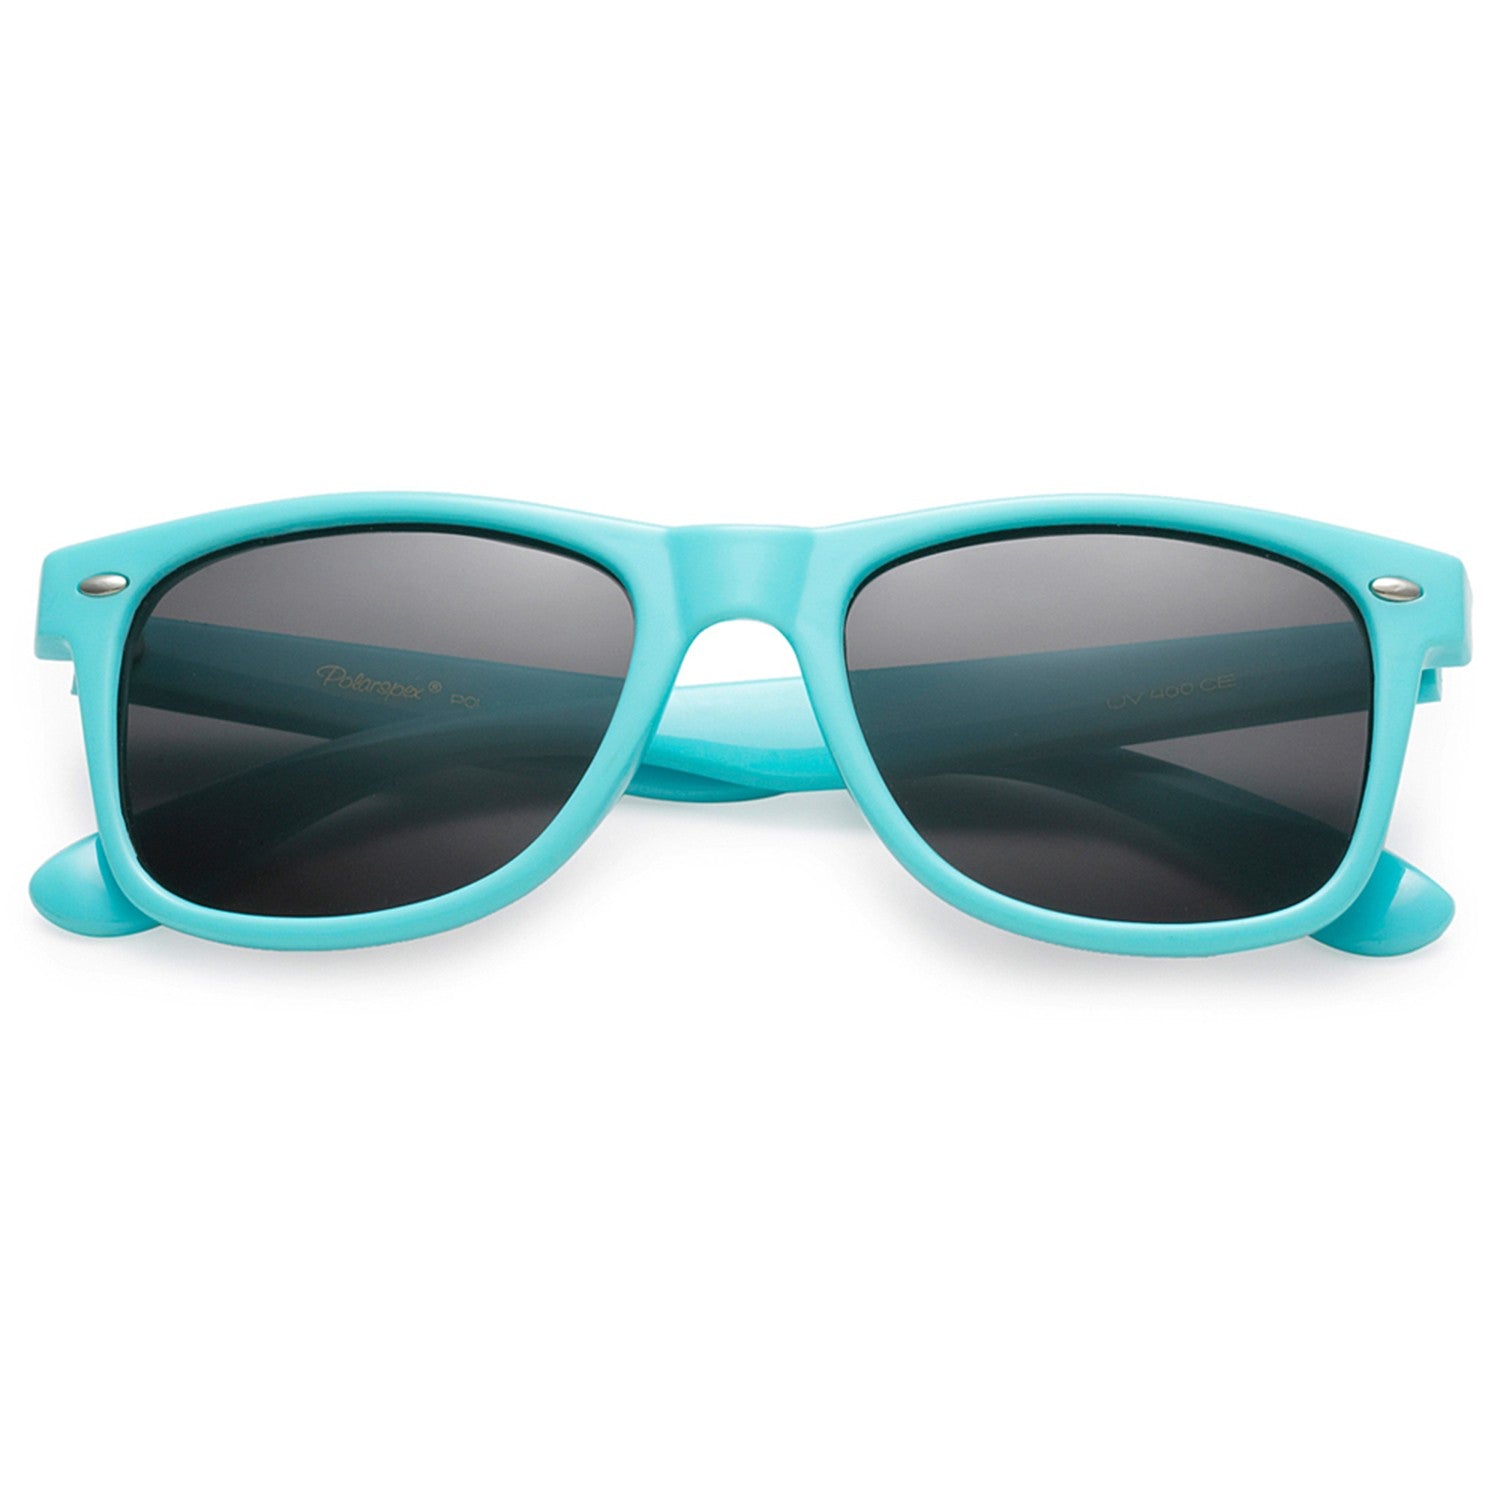 PolarSpex UV-Coated Plastic Men's Polarized Sunglasses